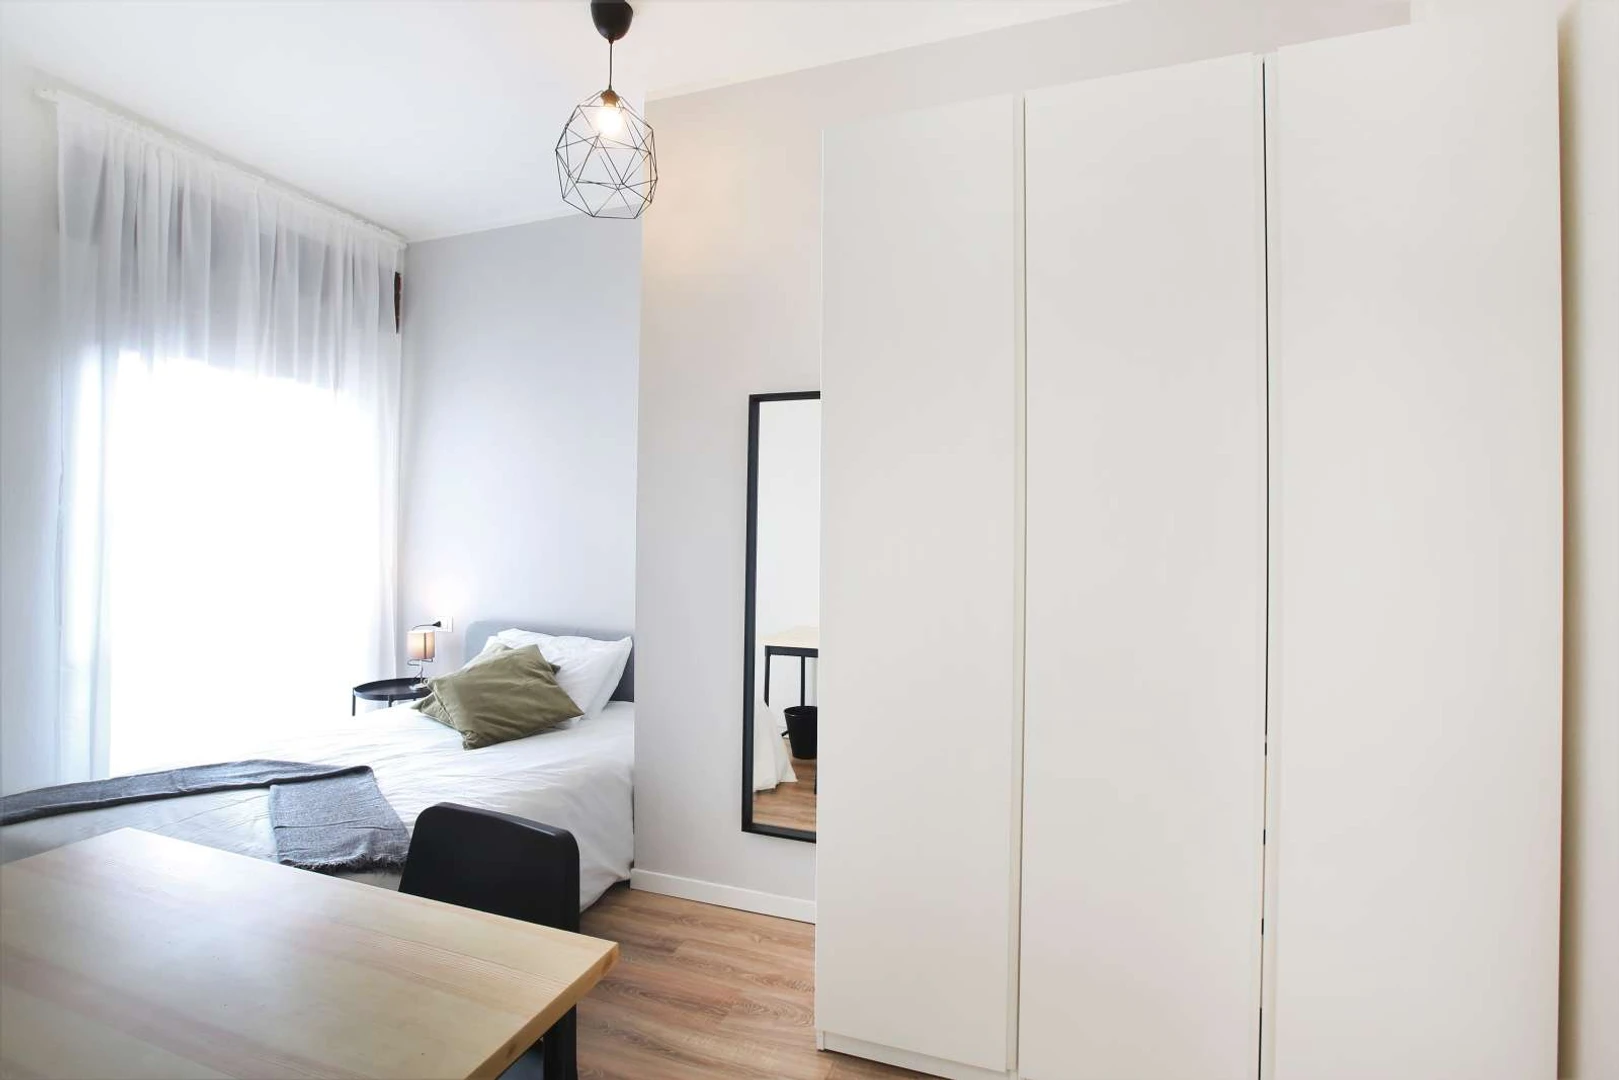 Cheap private room in modena